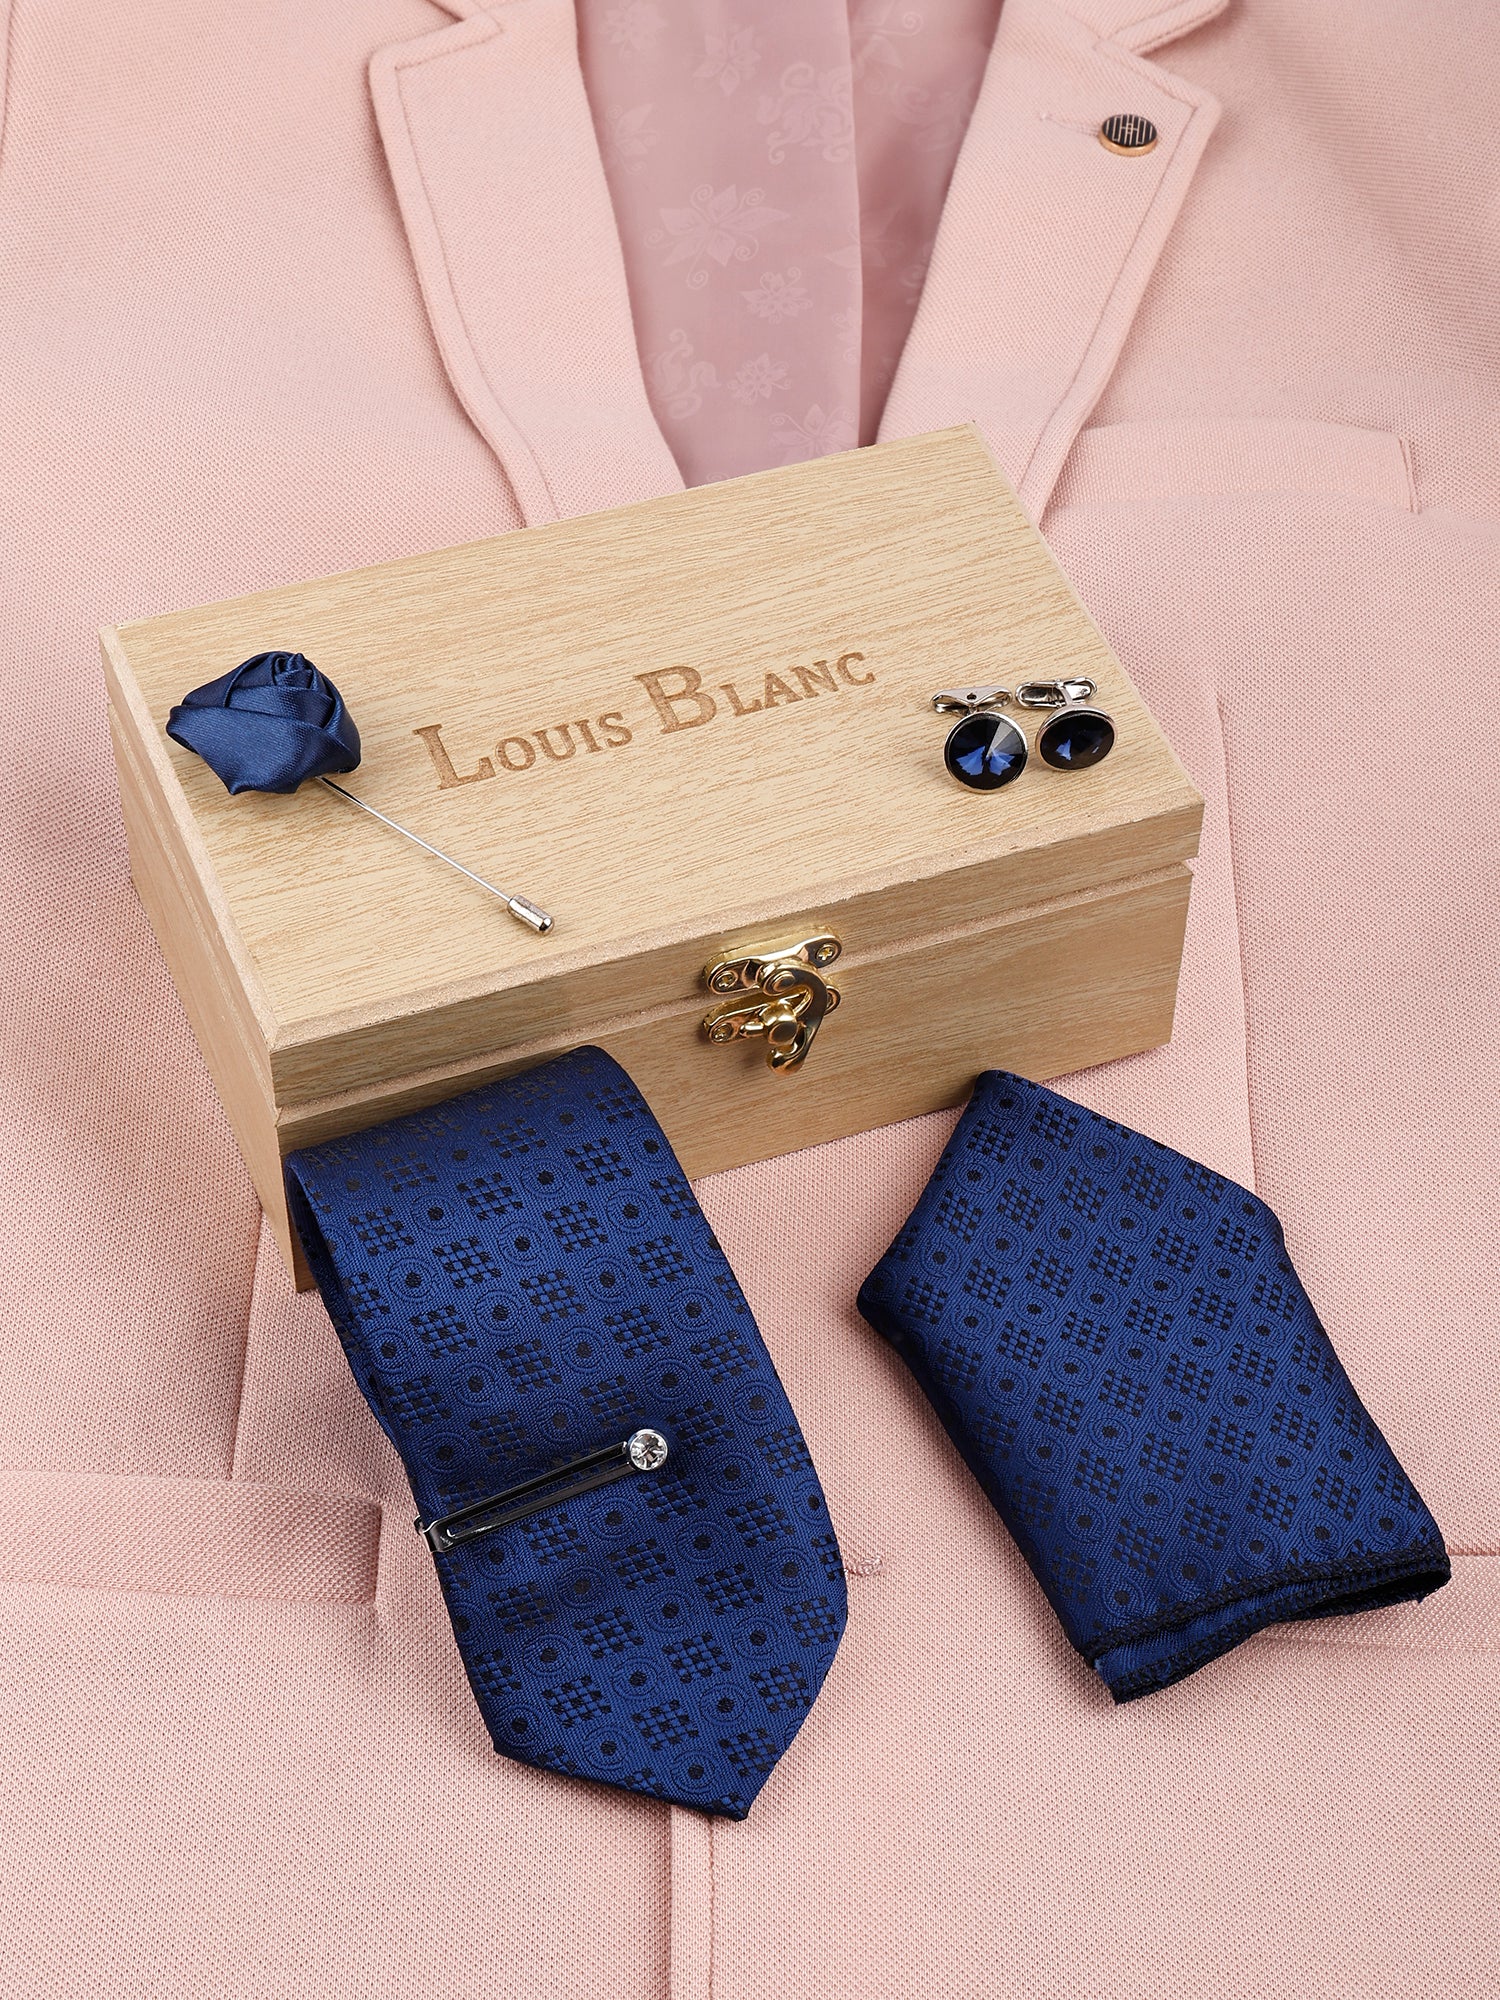 Denim Blue Italian Necktie Set With Pocket Square Silver Tie Pin, Cufflinks & Brooch